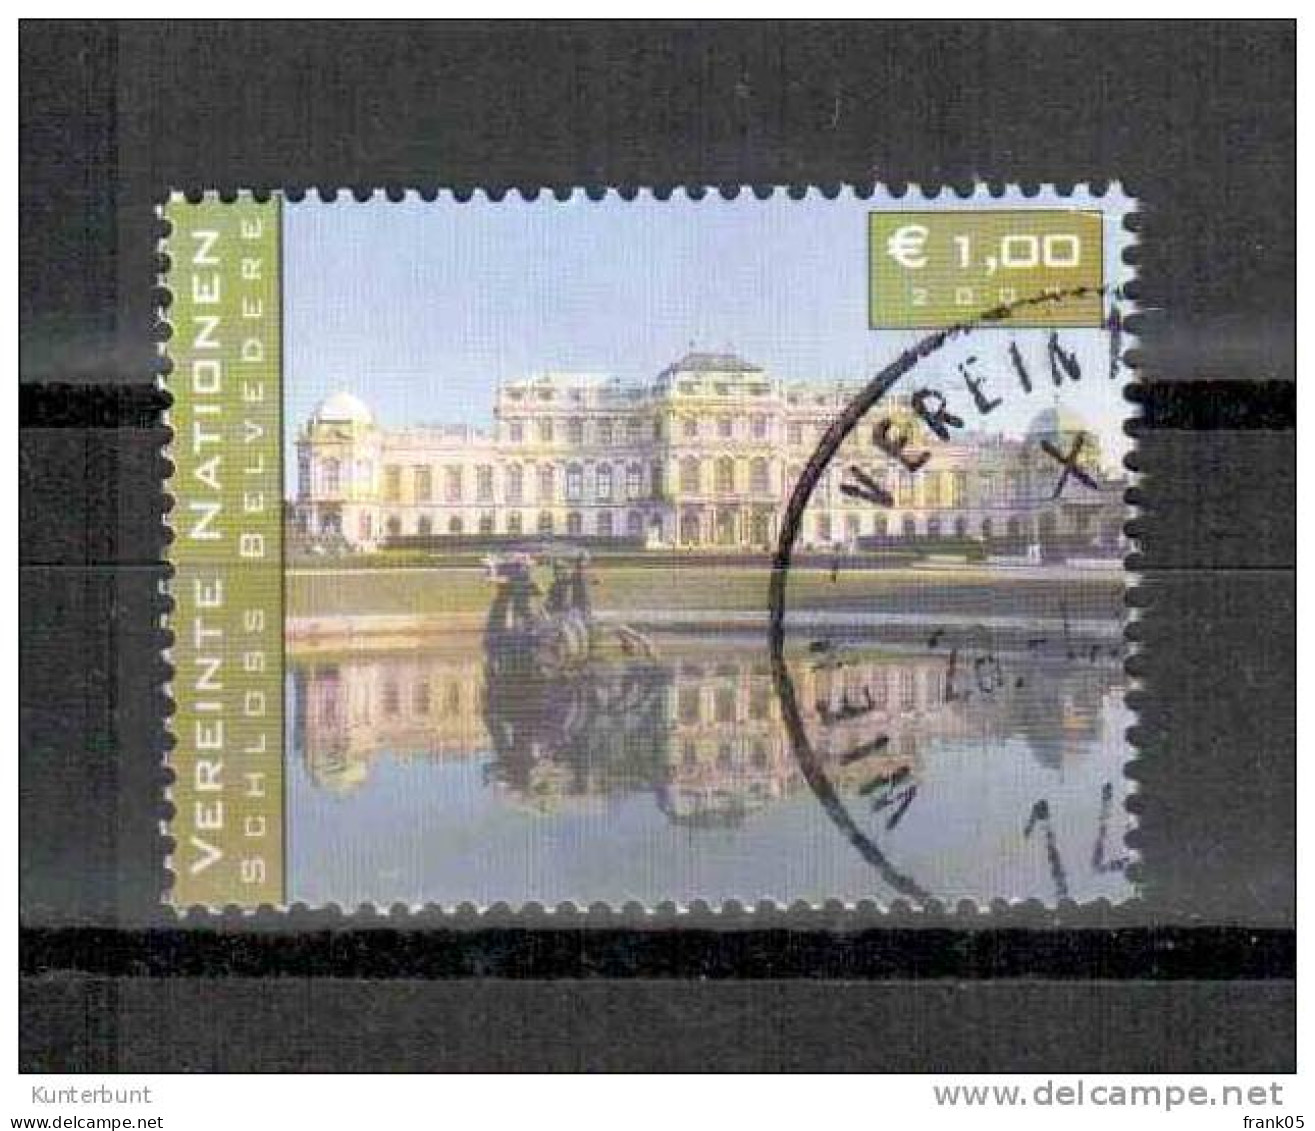 UN Wien / UN Vienna 2003 Belvedere Michel Nr. 388 O - Used Stamps